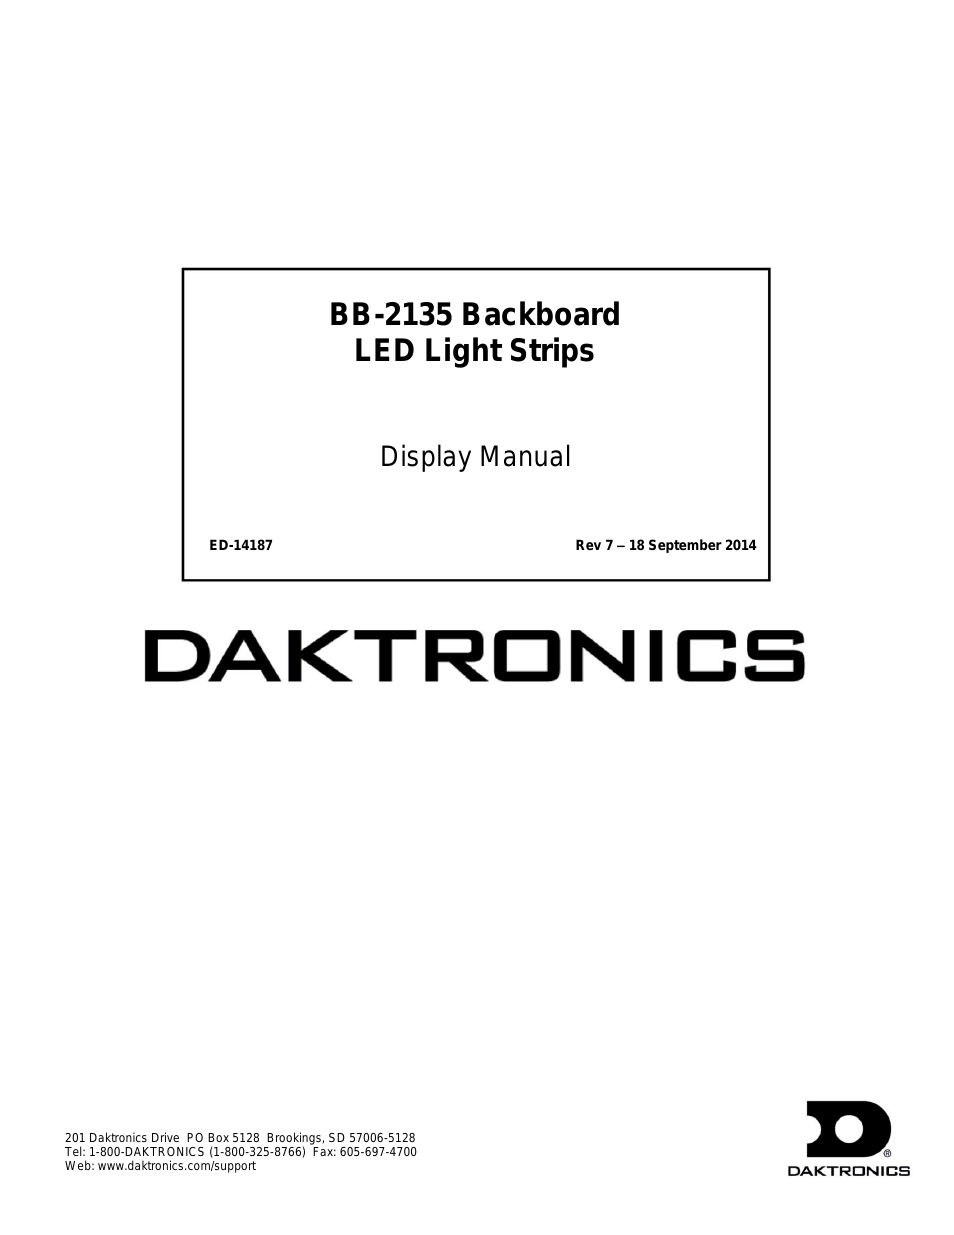 BB-2135 Backboard LED Light Strip